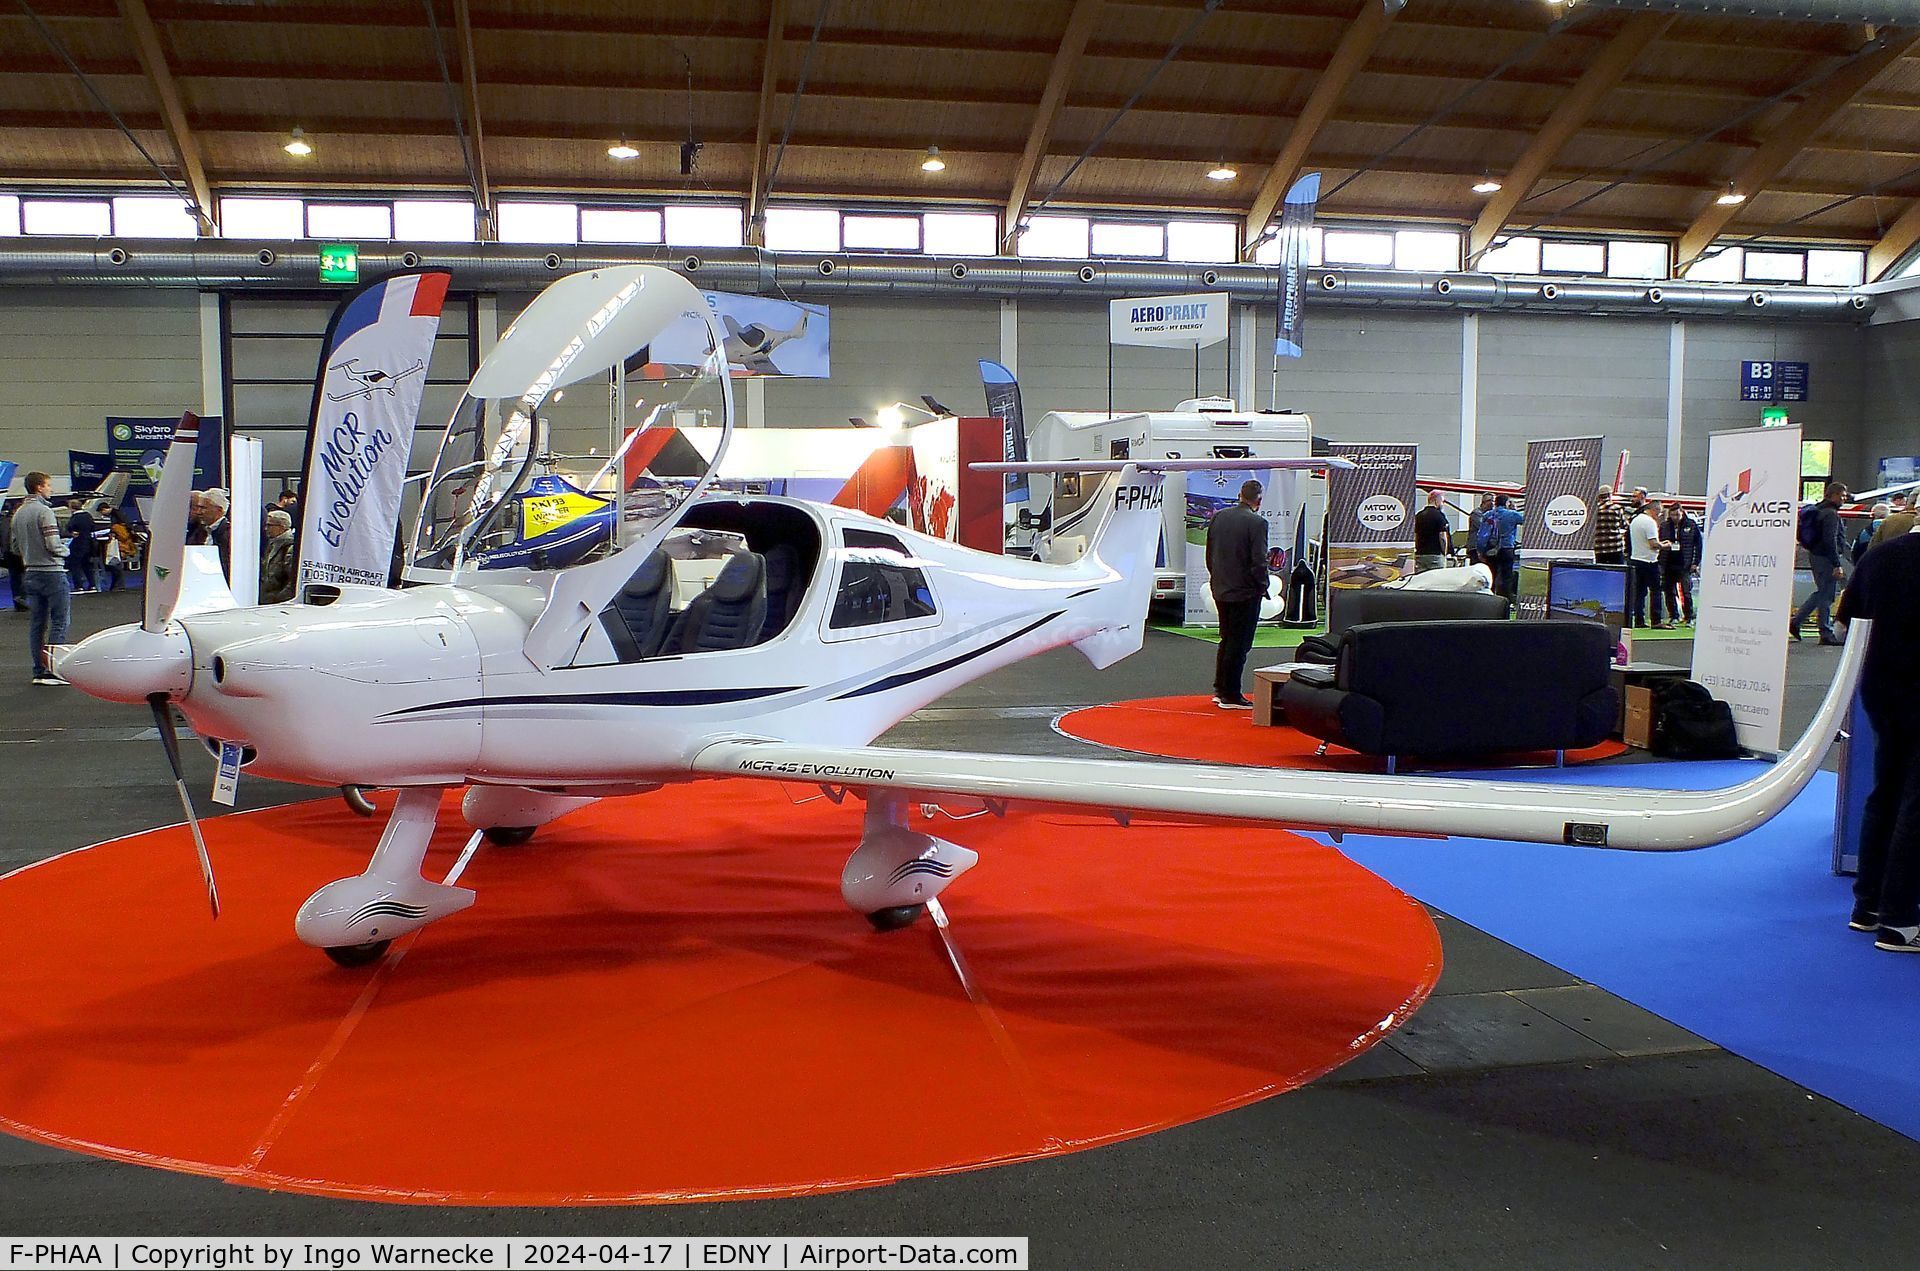 F-PHAA, Dyn'Aero MCR-4S 2002 Evolution C/N 182, Dyn'Aero MCR-4S 2002 Evolution at the AERO 2024, Friedrichshafen